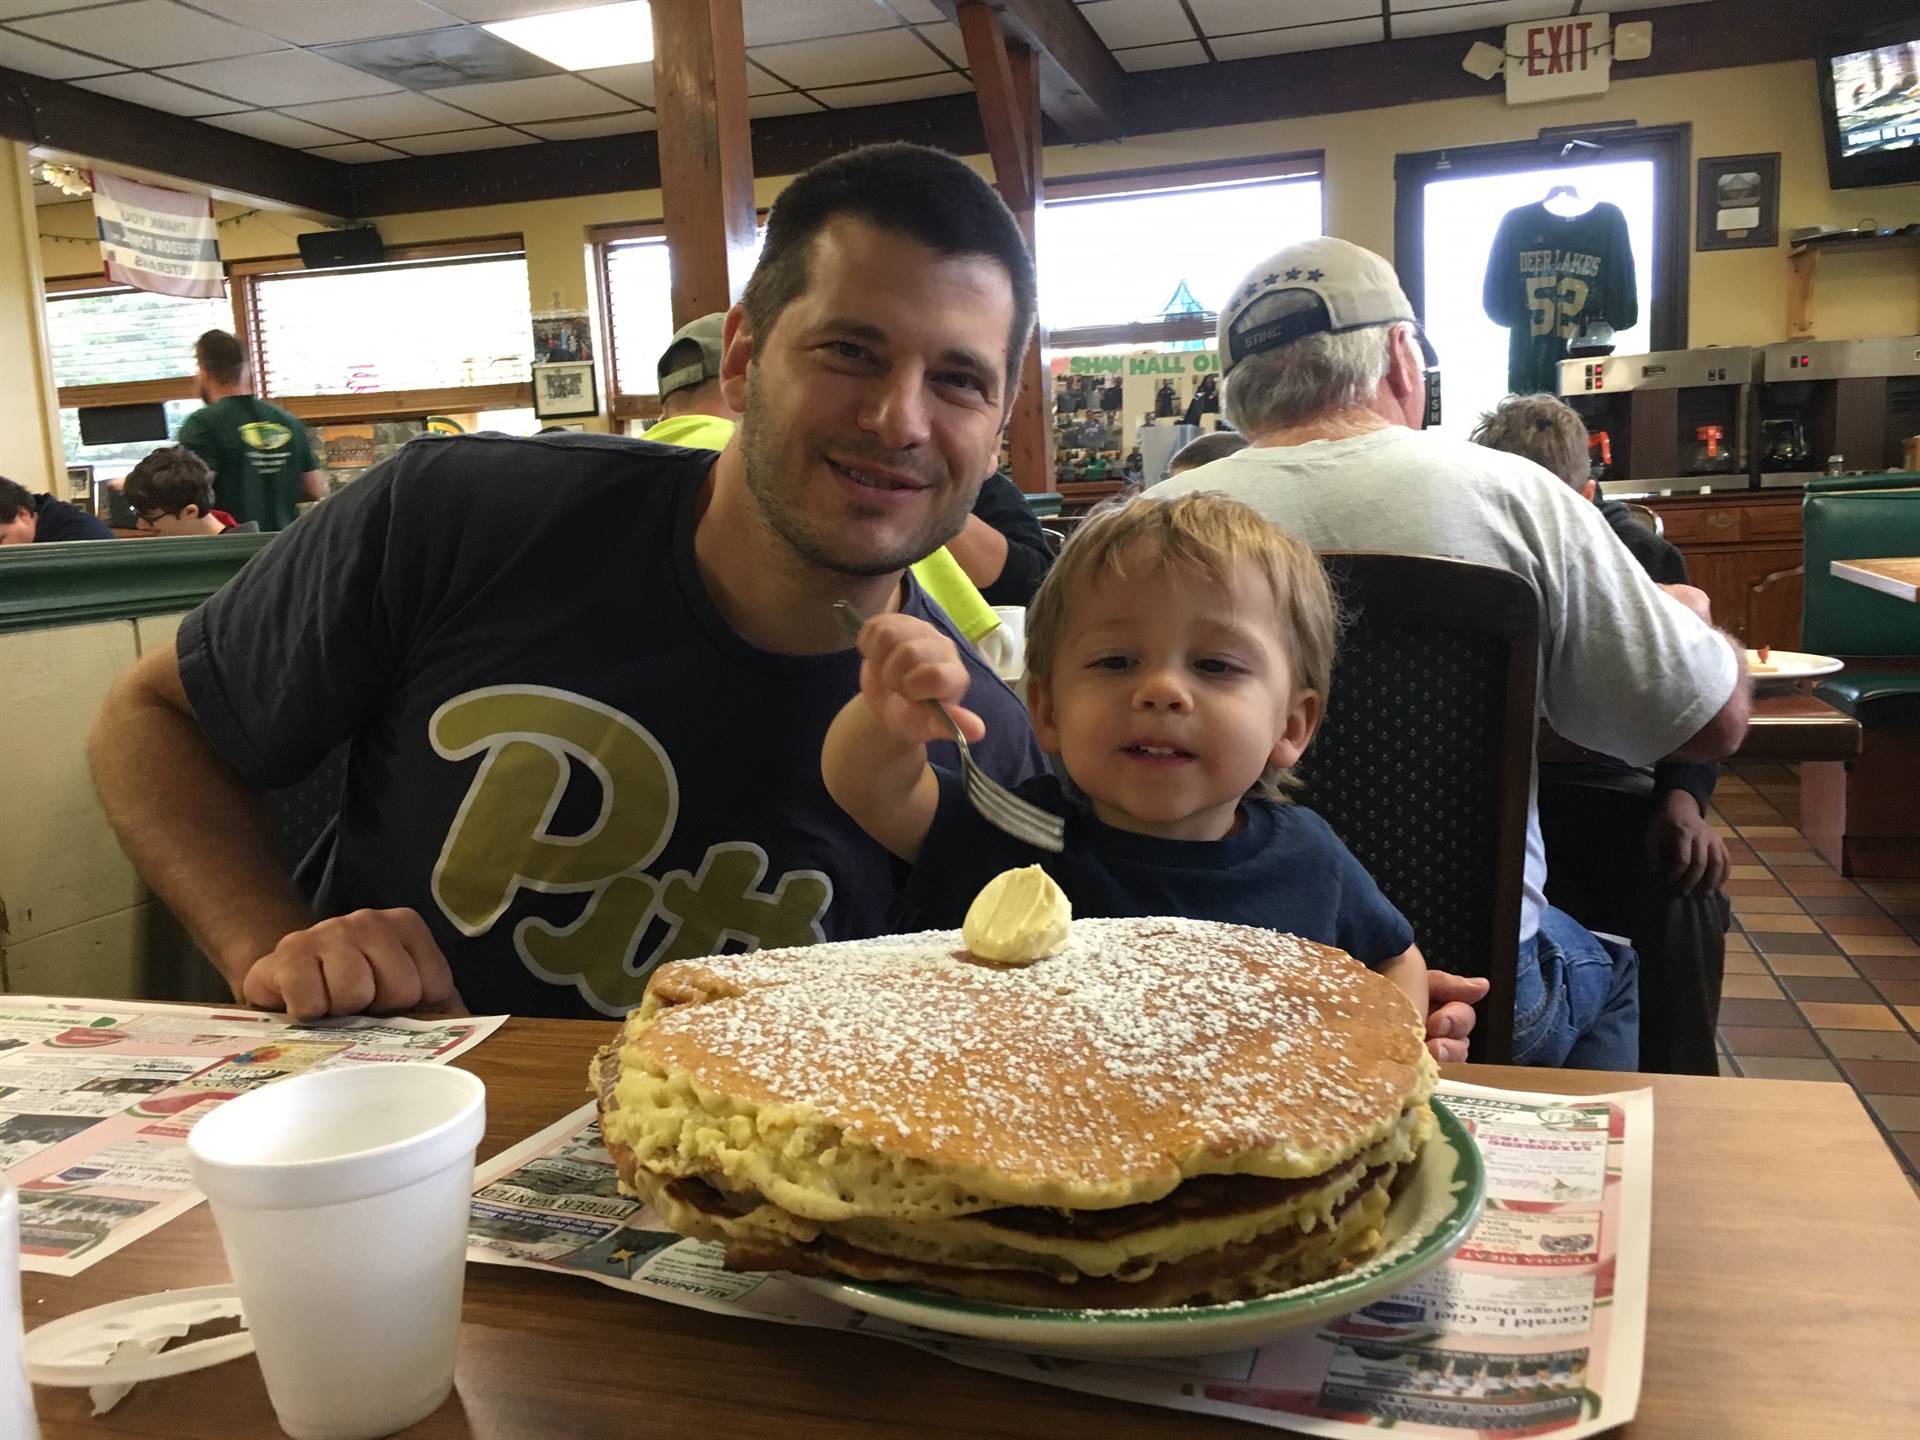 Dad & Son at Deer Lakes Diner